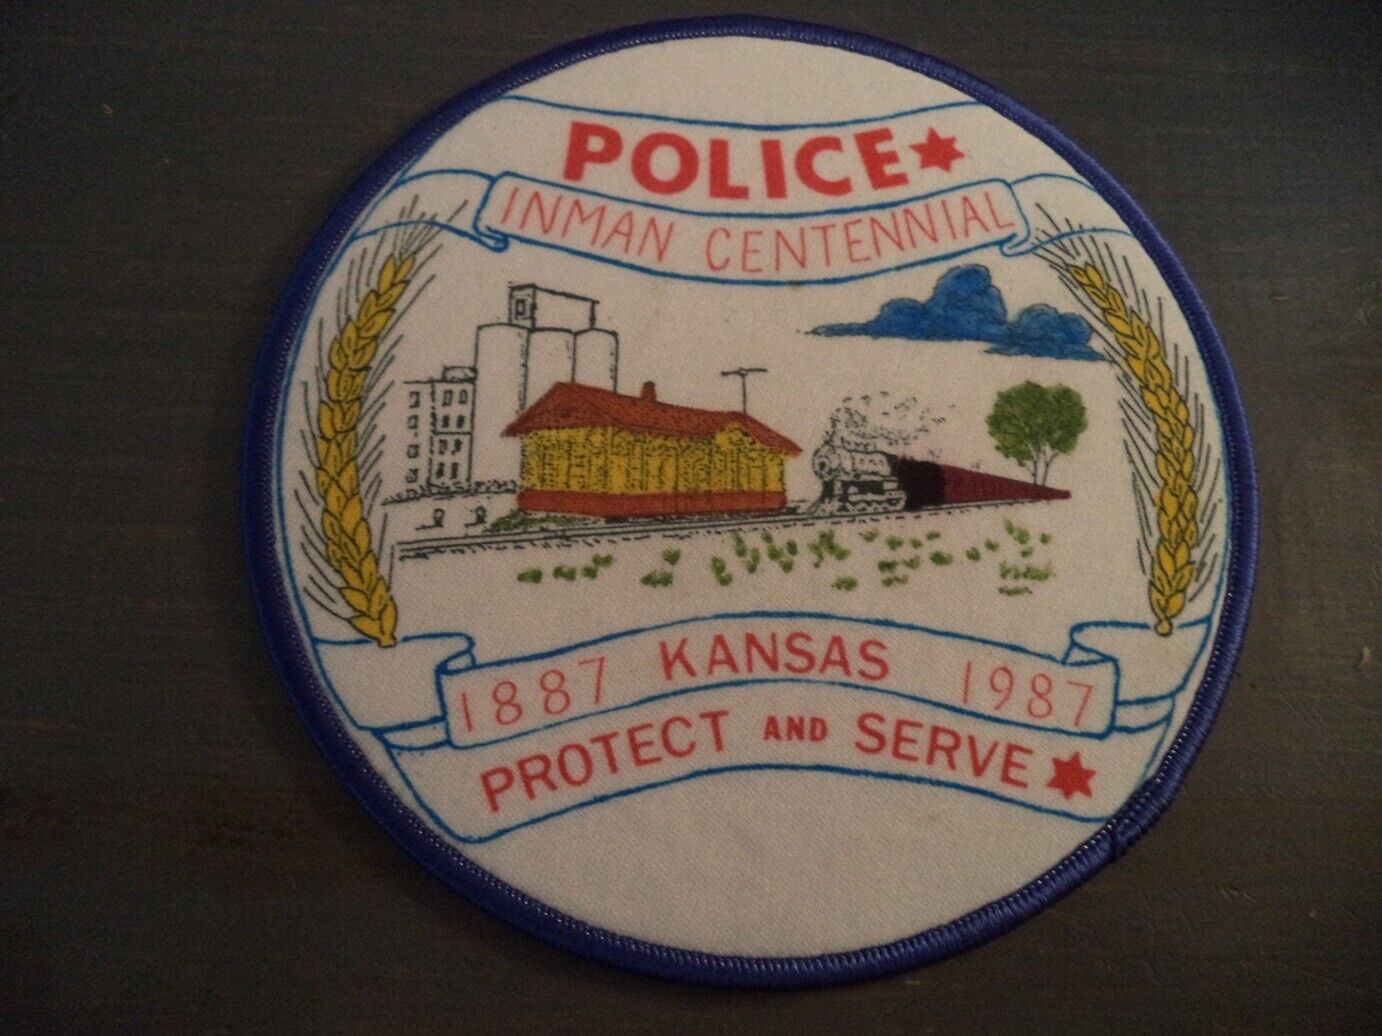 Inman KANSAS Police Patch, 1987 Centennial Version Primitive and VERY RARE Vers.